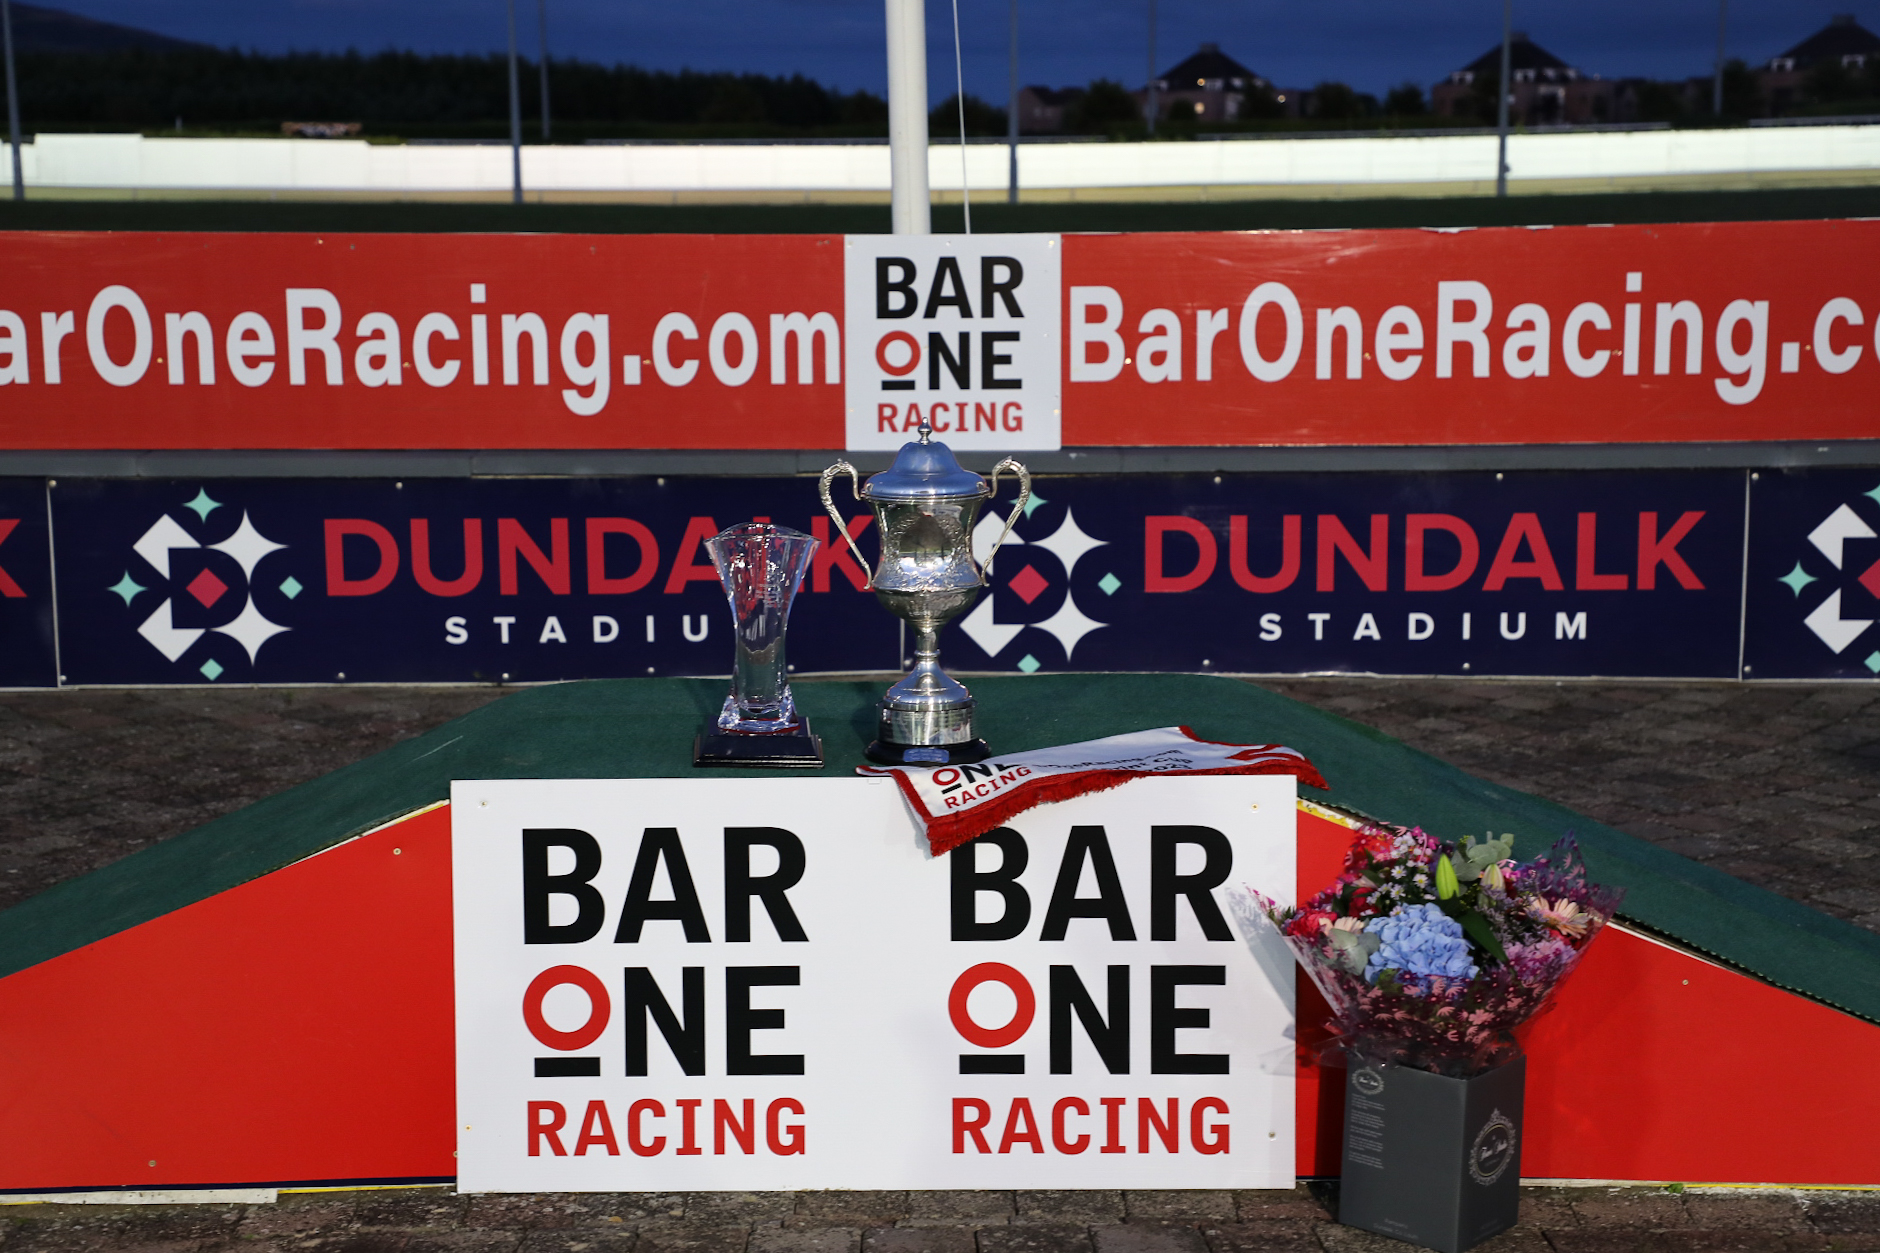 Bar One Racing Sprint Cup Heats Get Underway at Dundalk Stadium 